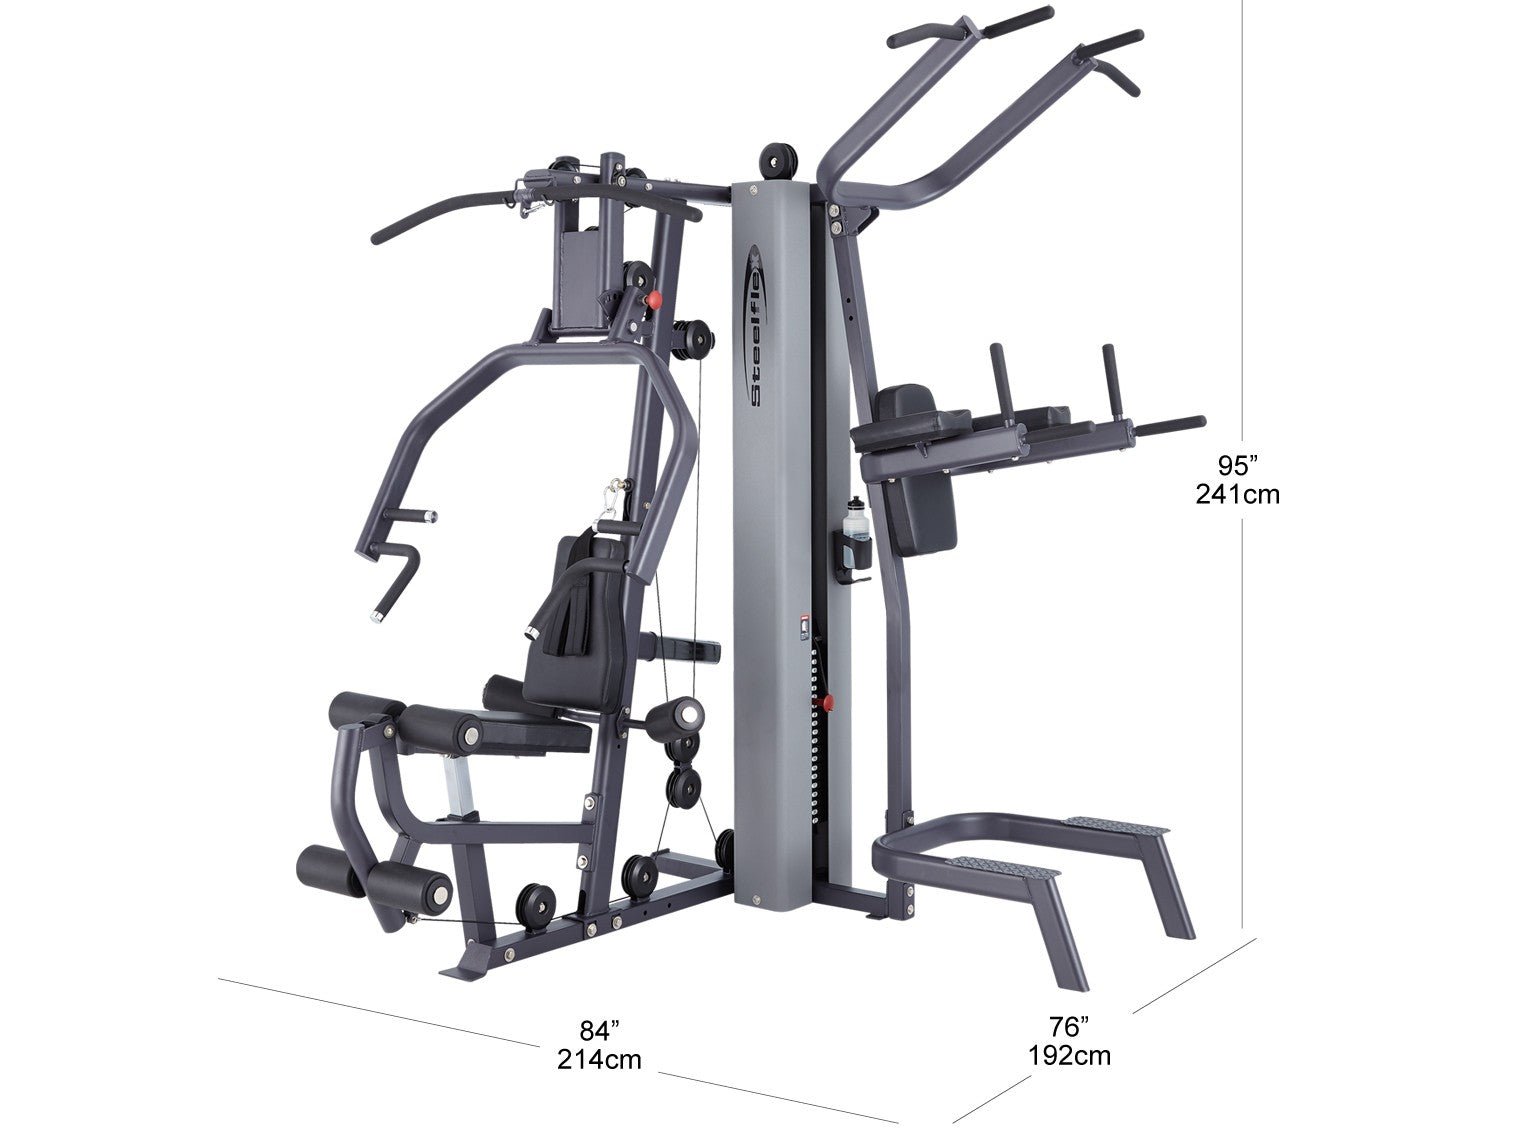 Steelflex MG100B Multi Gym Training System Weight Machine - Upzy.com